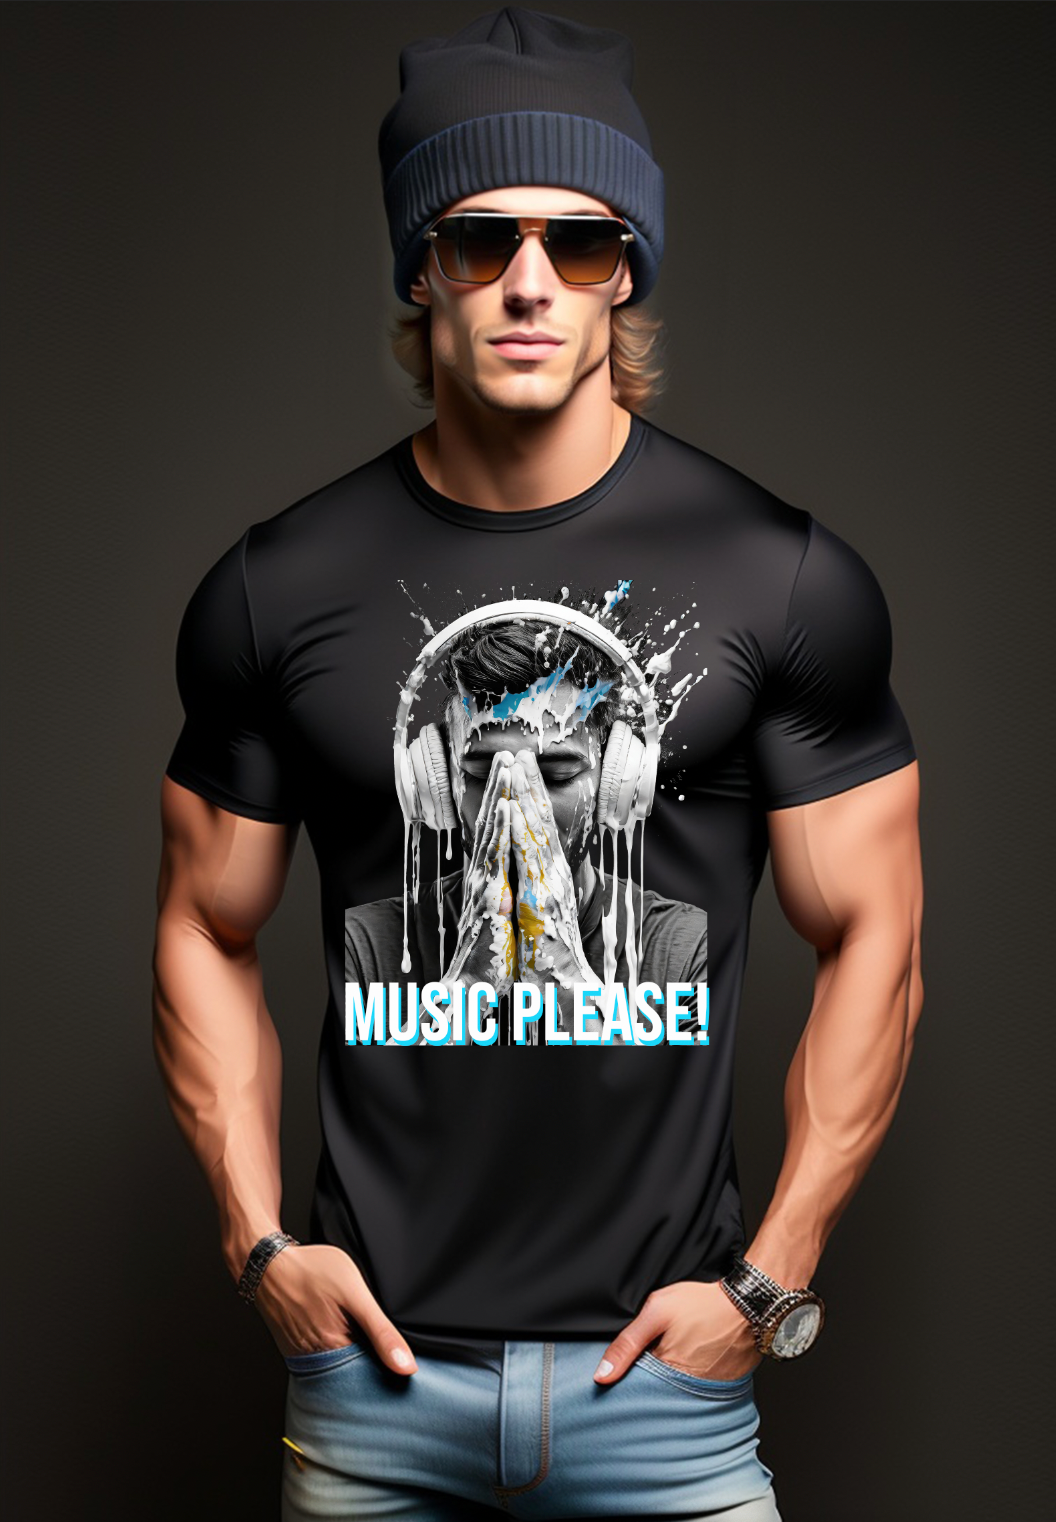 Praying Hands Music Please Art design Exclusive T-Shirts | Grooveman Music